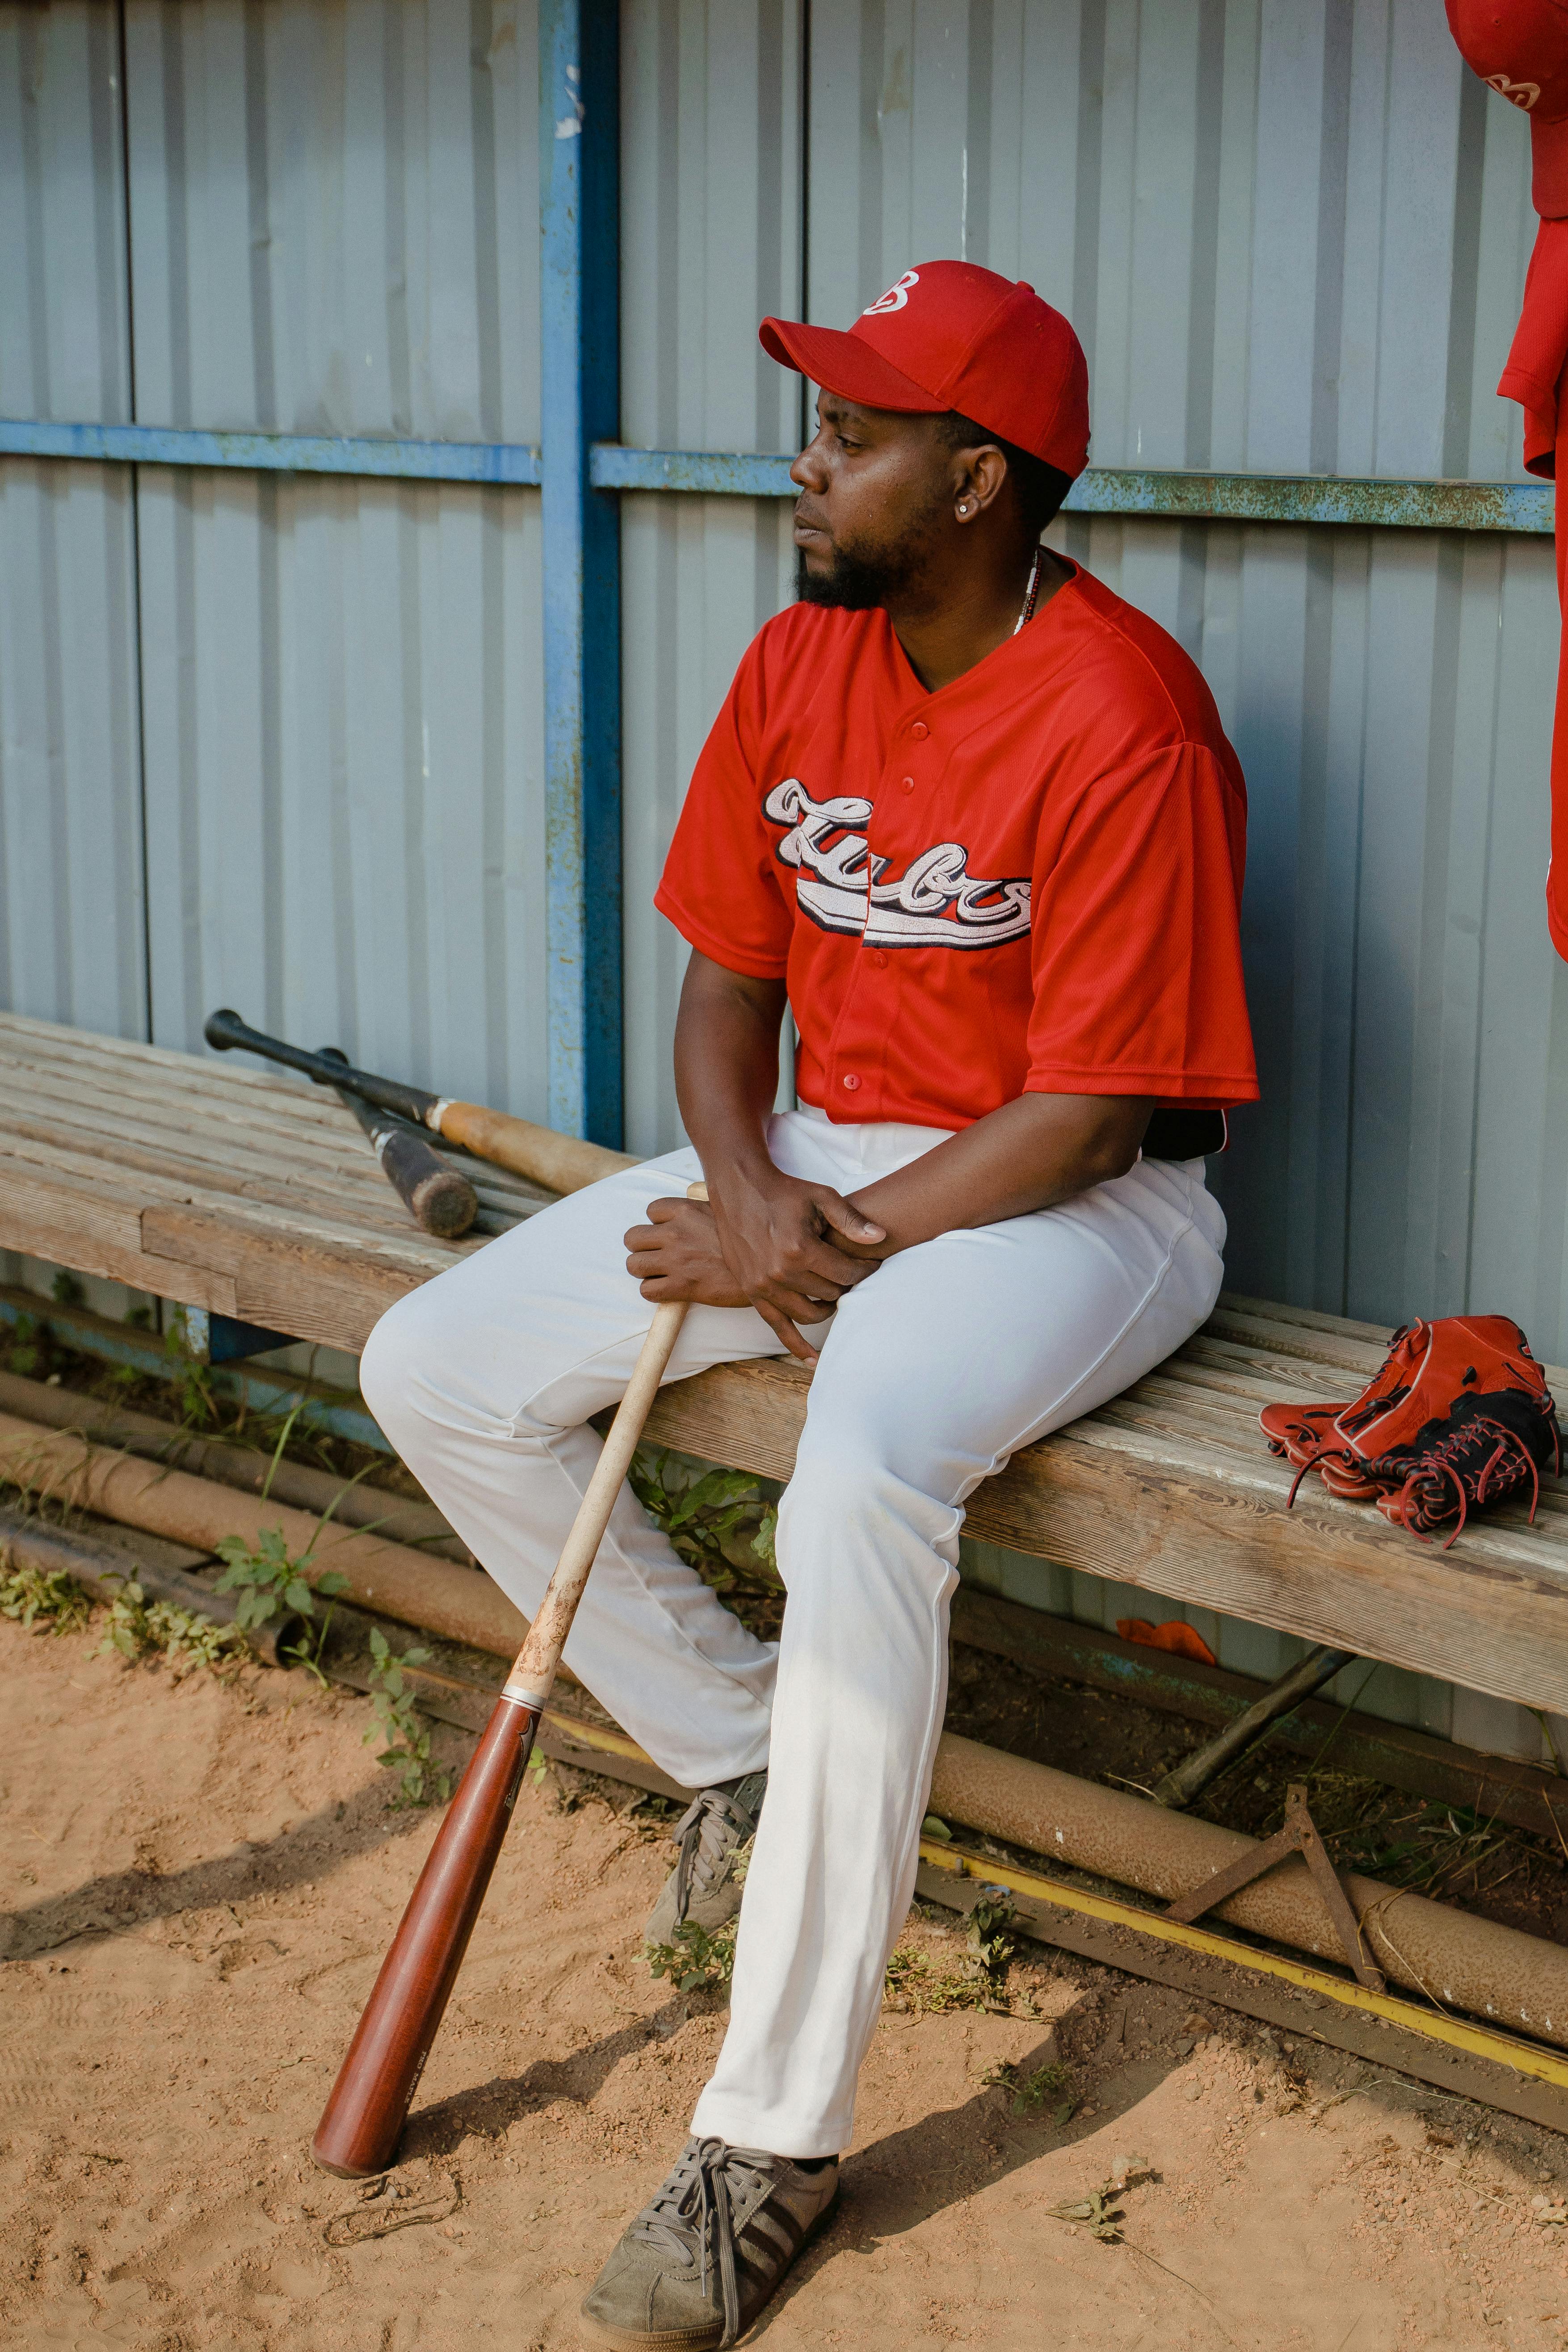 Baseball Player Sitting on a Bench · Free Stock Photo